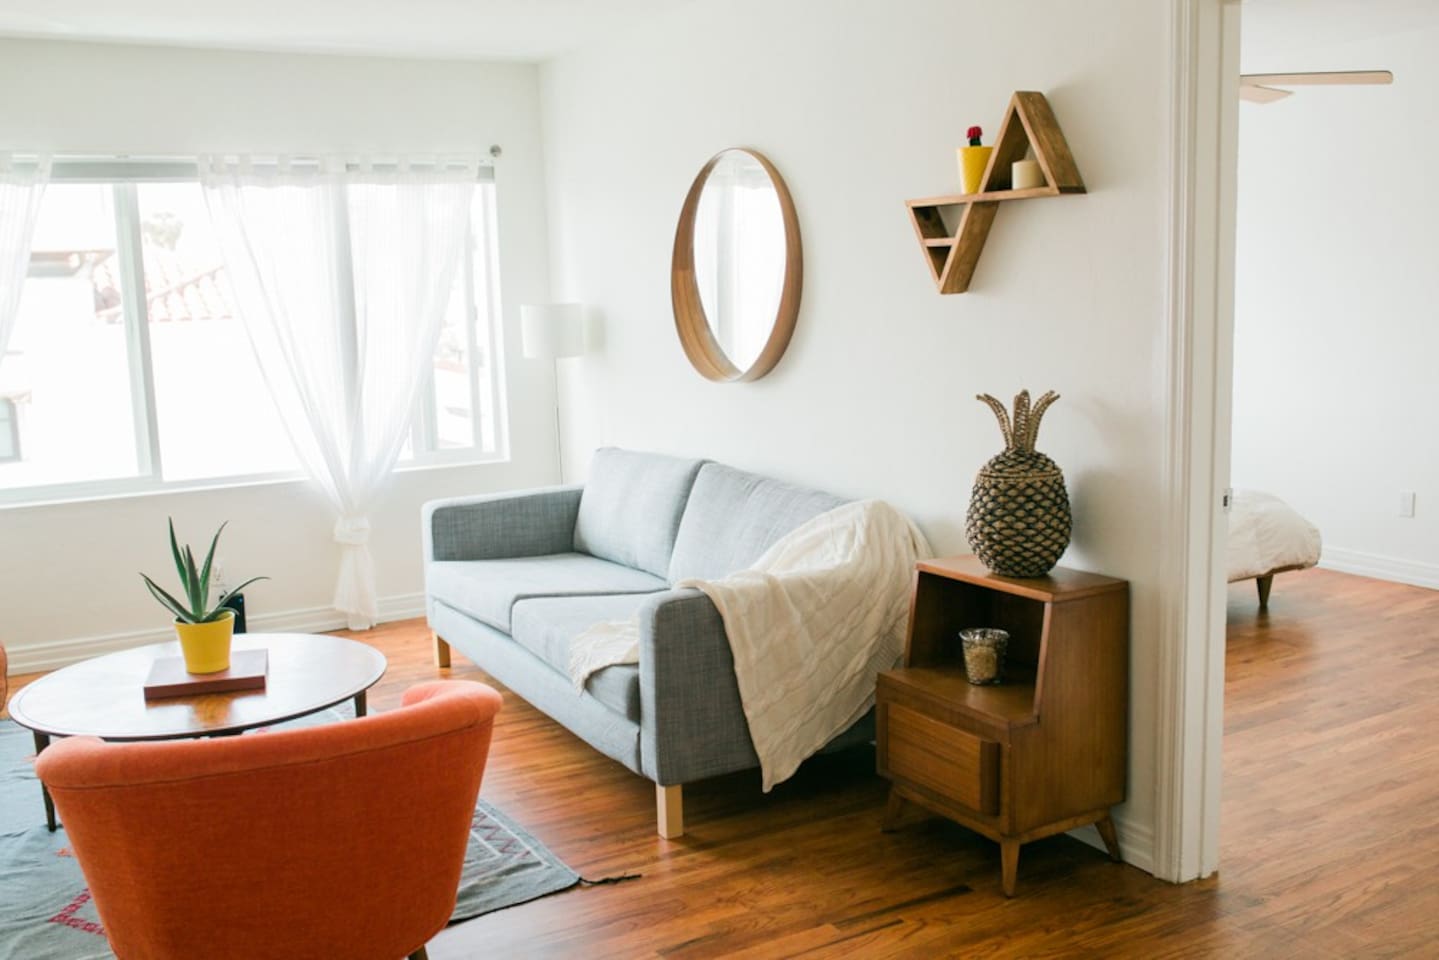 California Airbnb Rentals